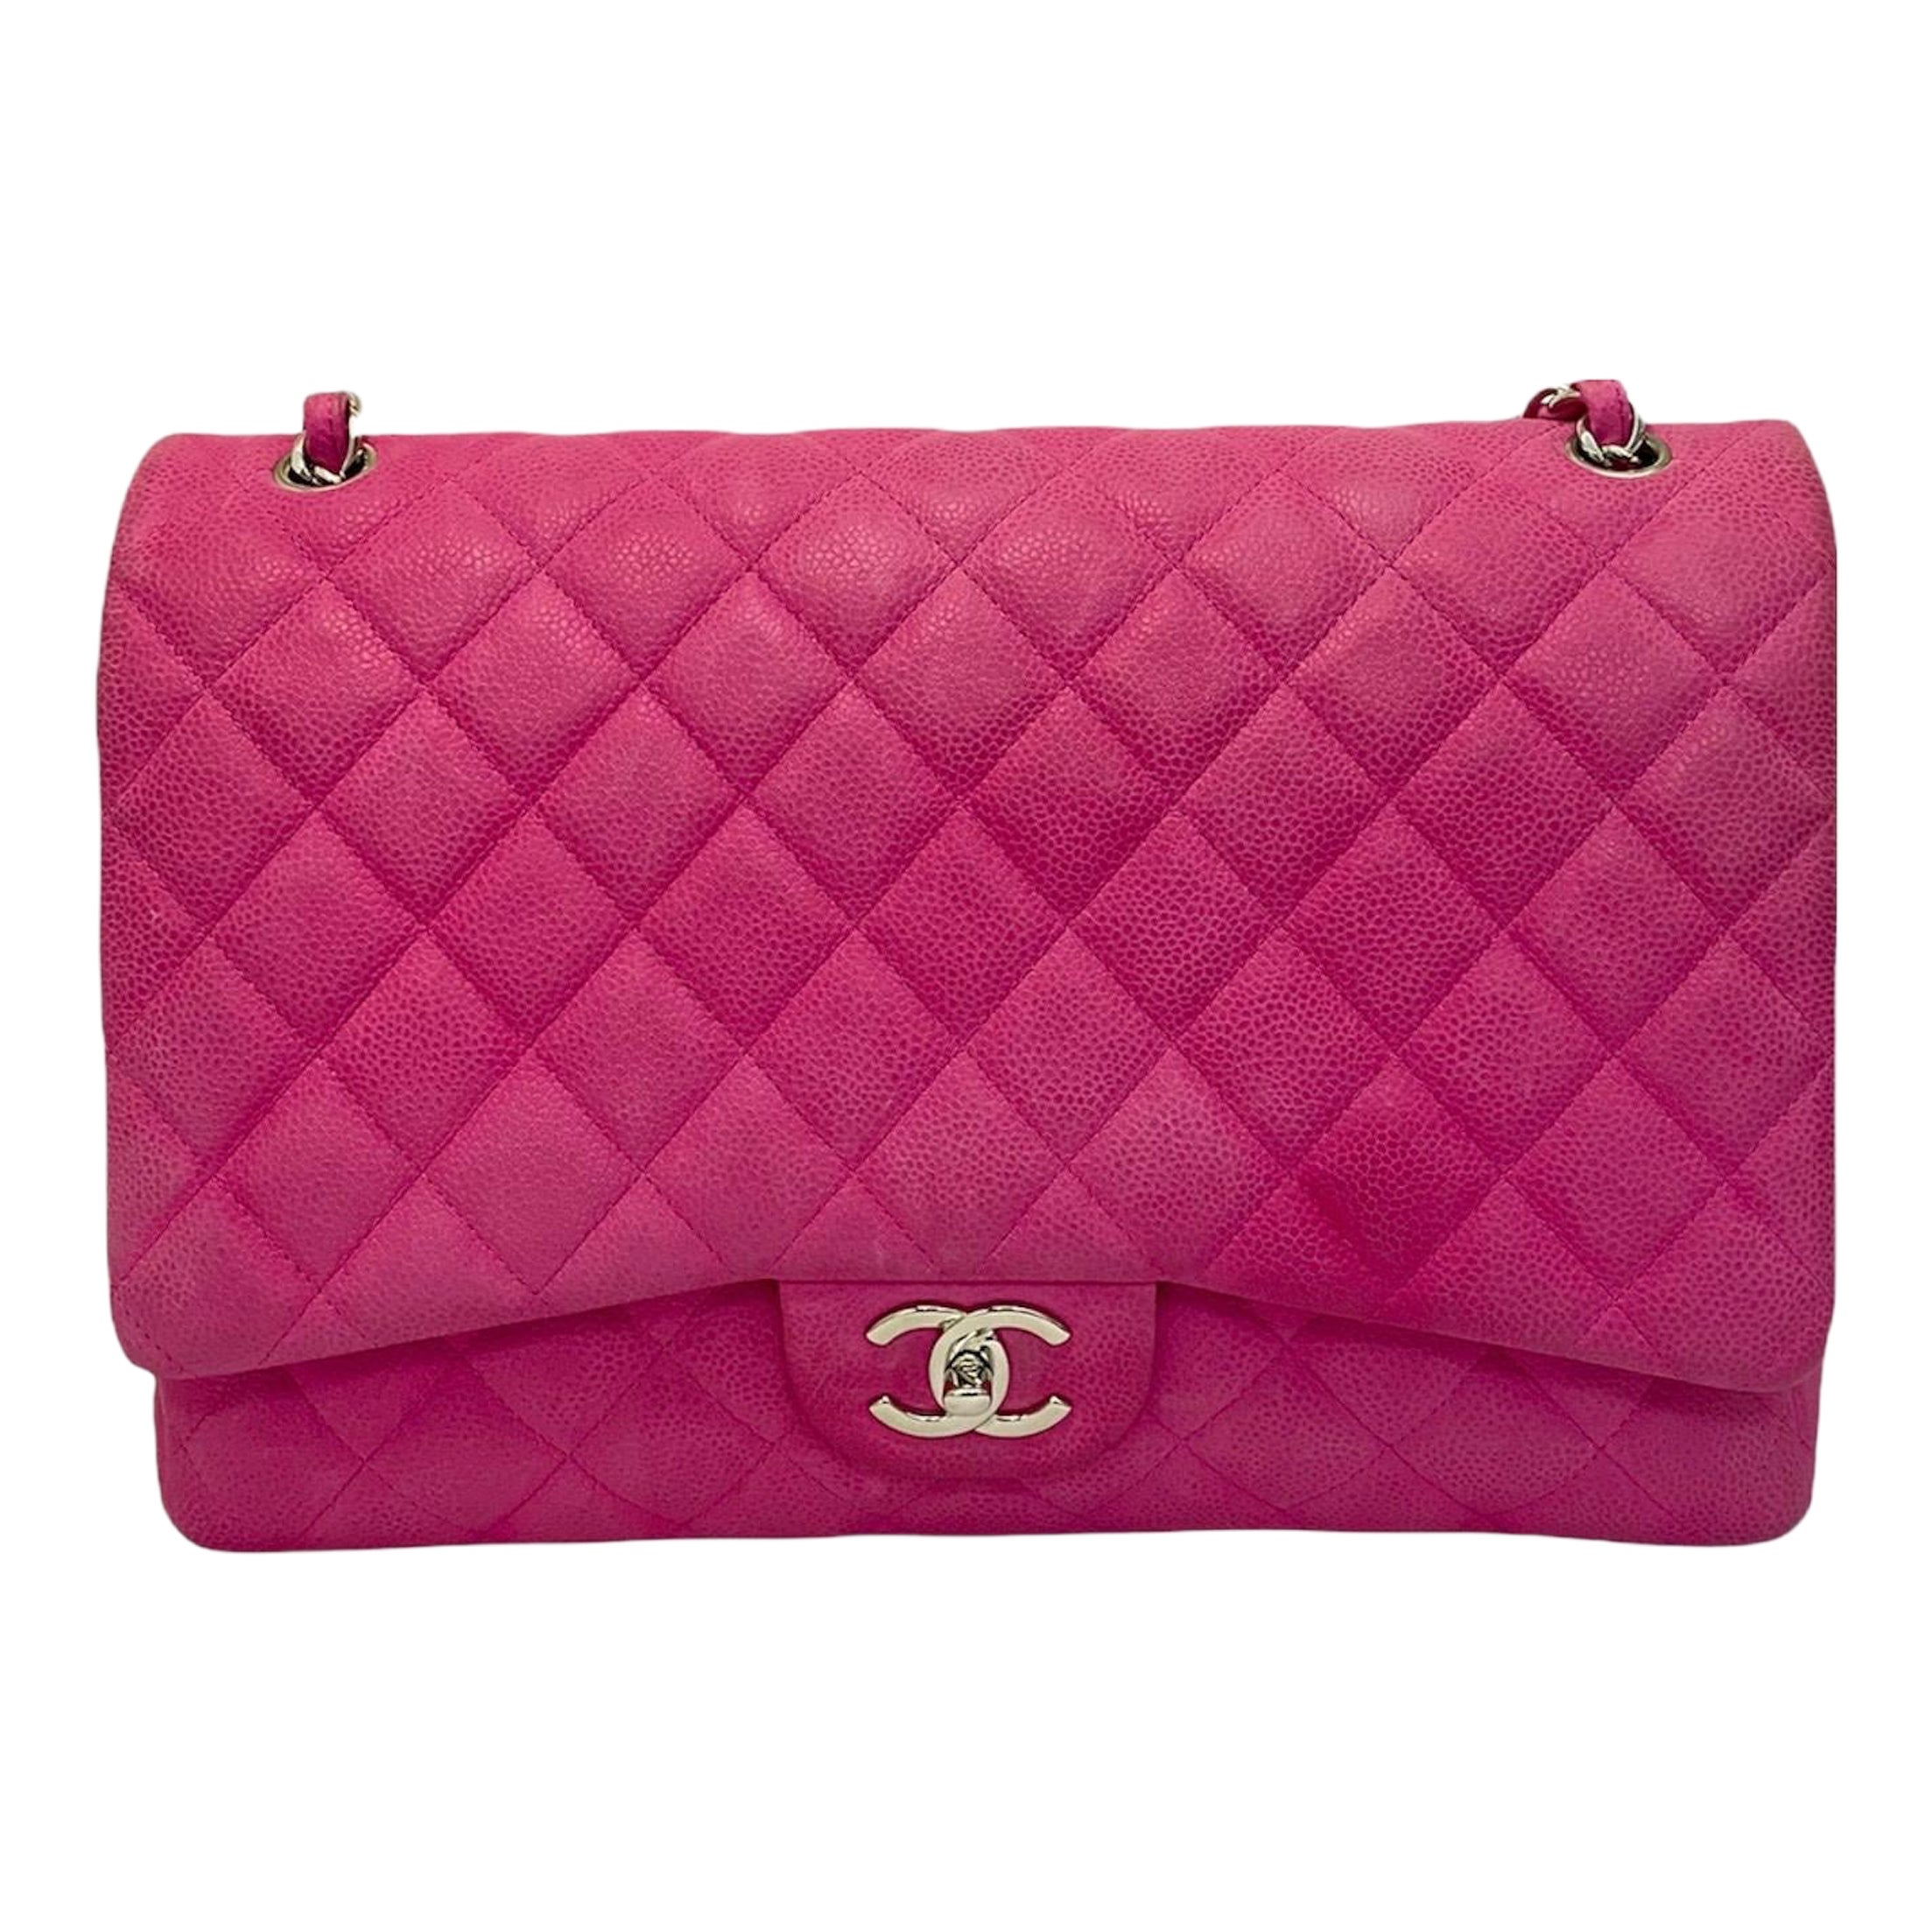 Chanel Fuchsia Leather Maxi Jumbo Bag